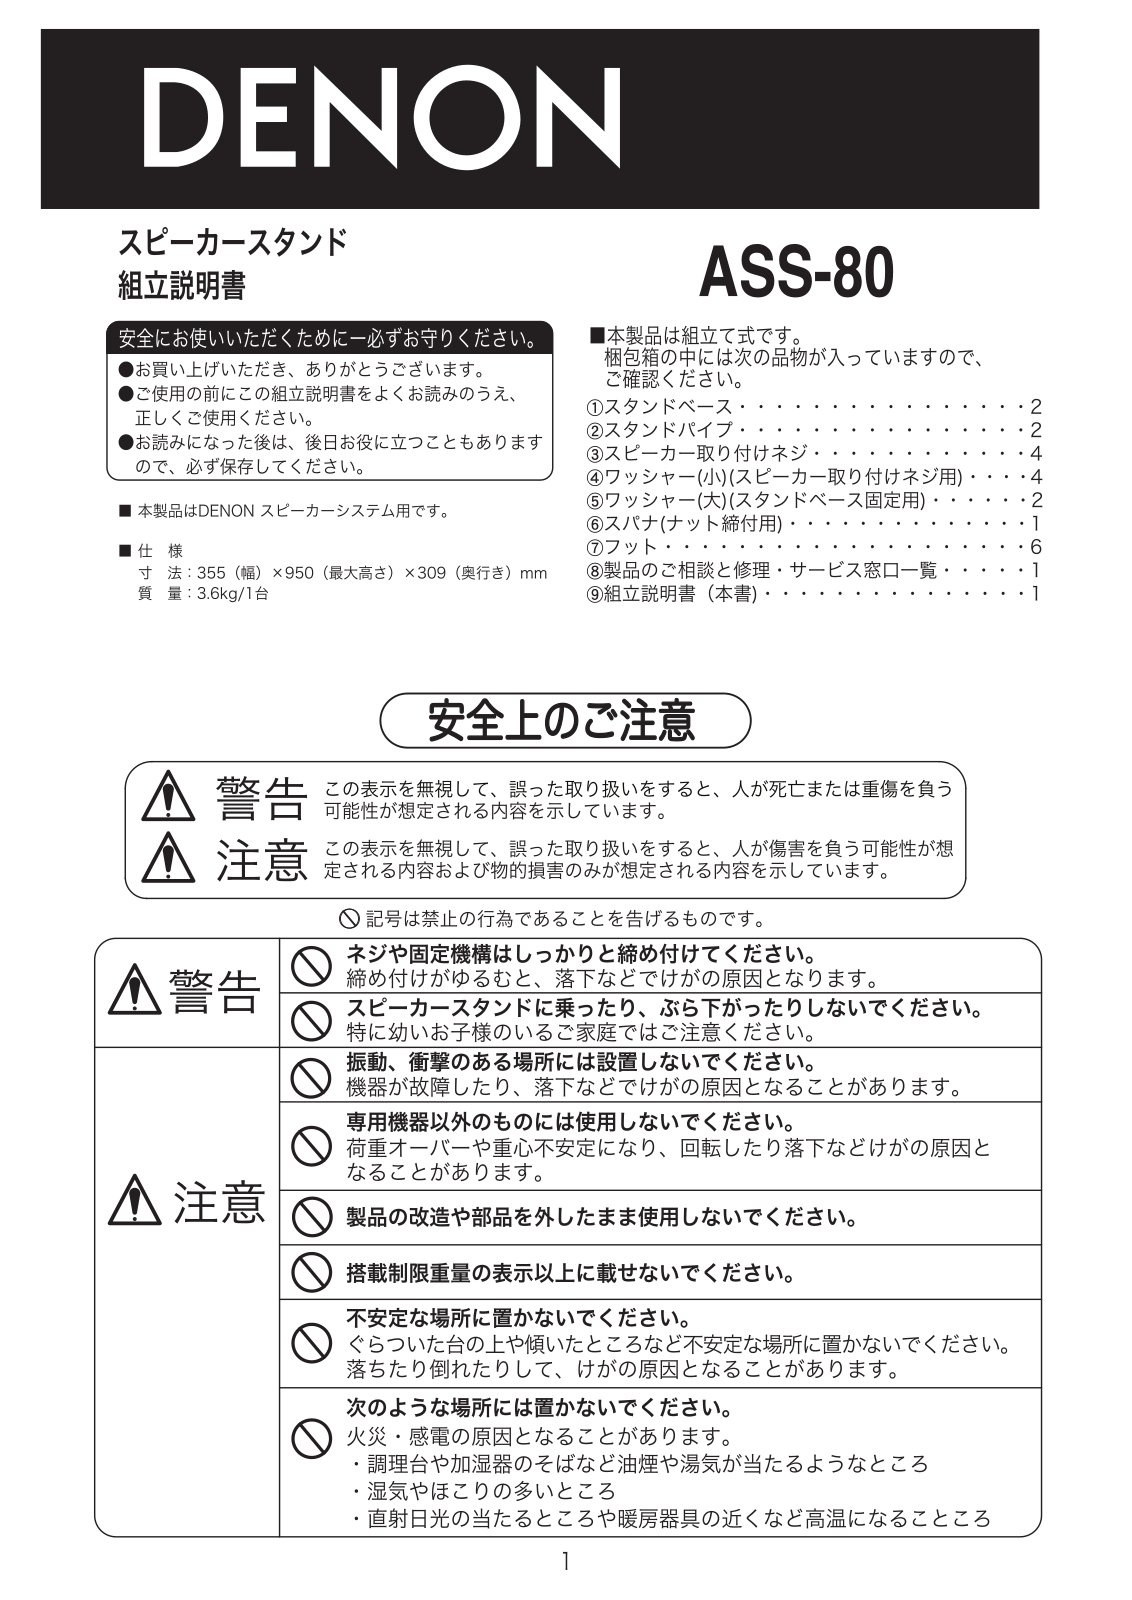 Denon ASS-80 Owner's Manual